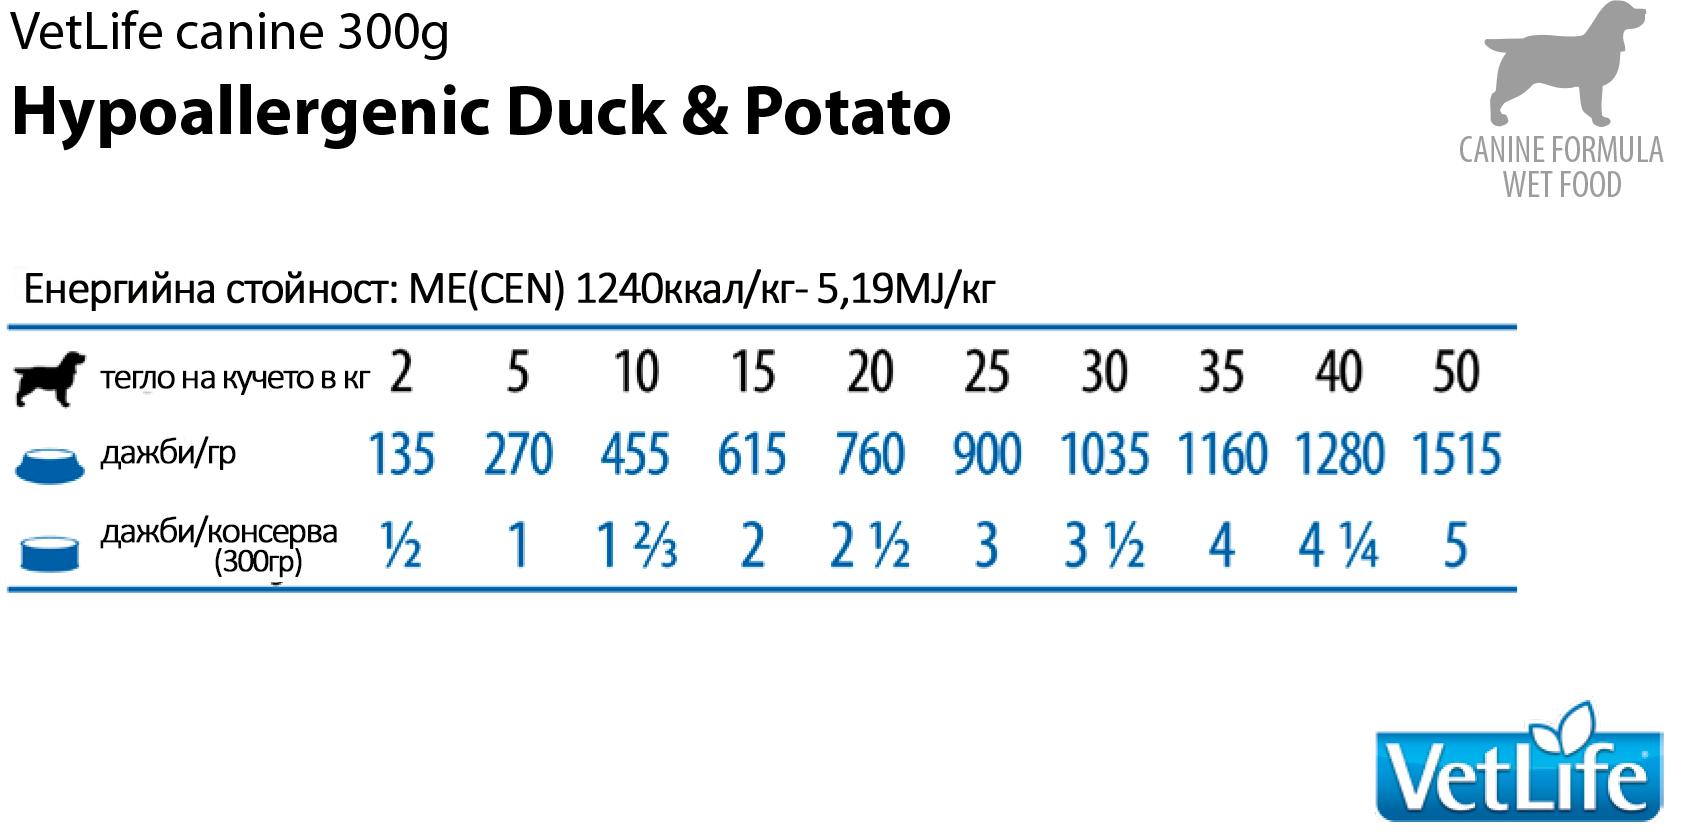 Vet Life Hypoallergenic Duck & Potato